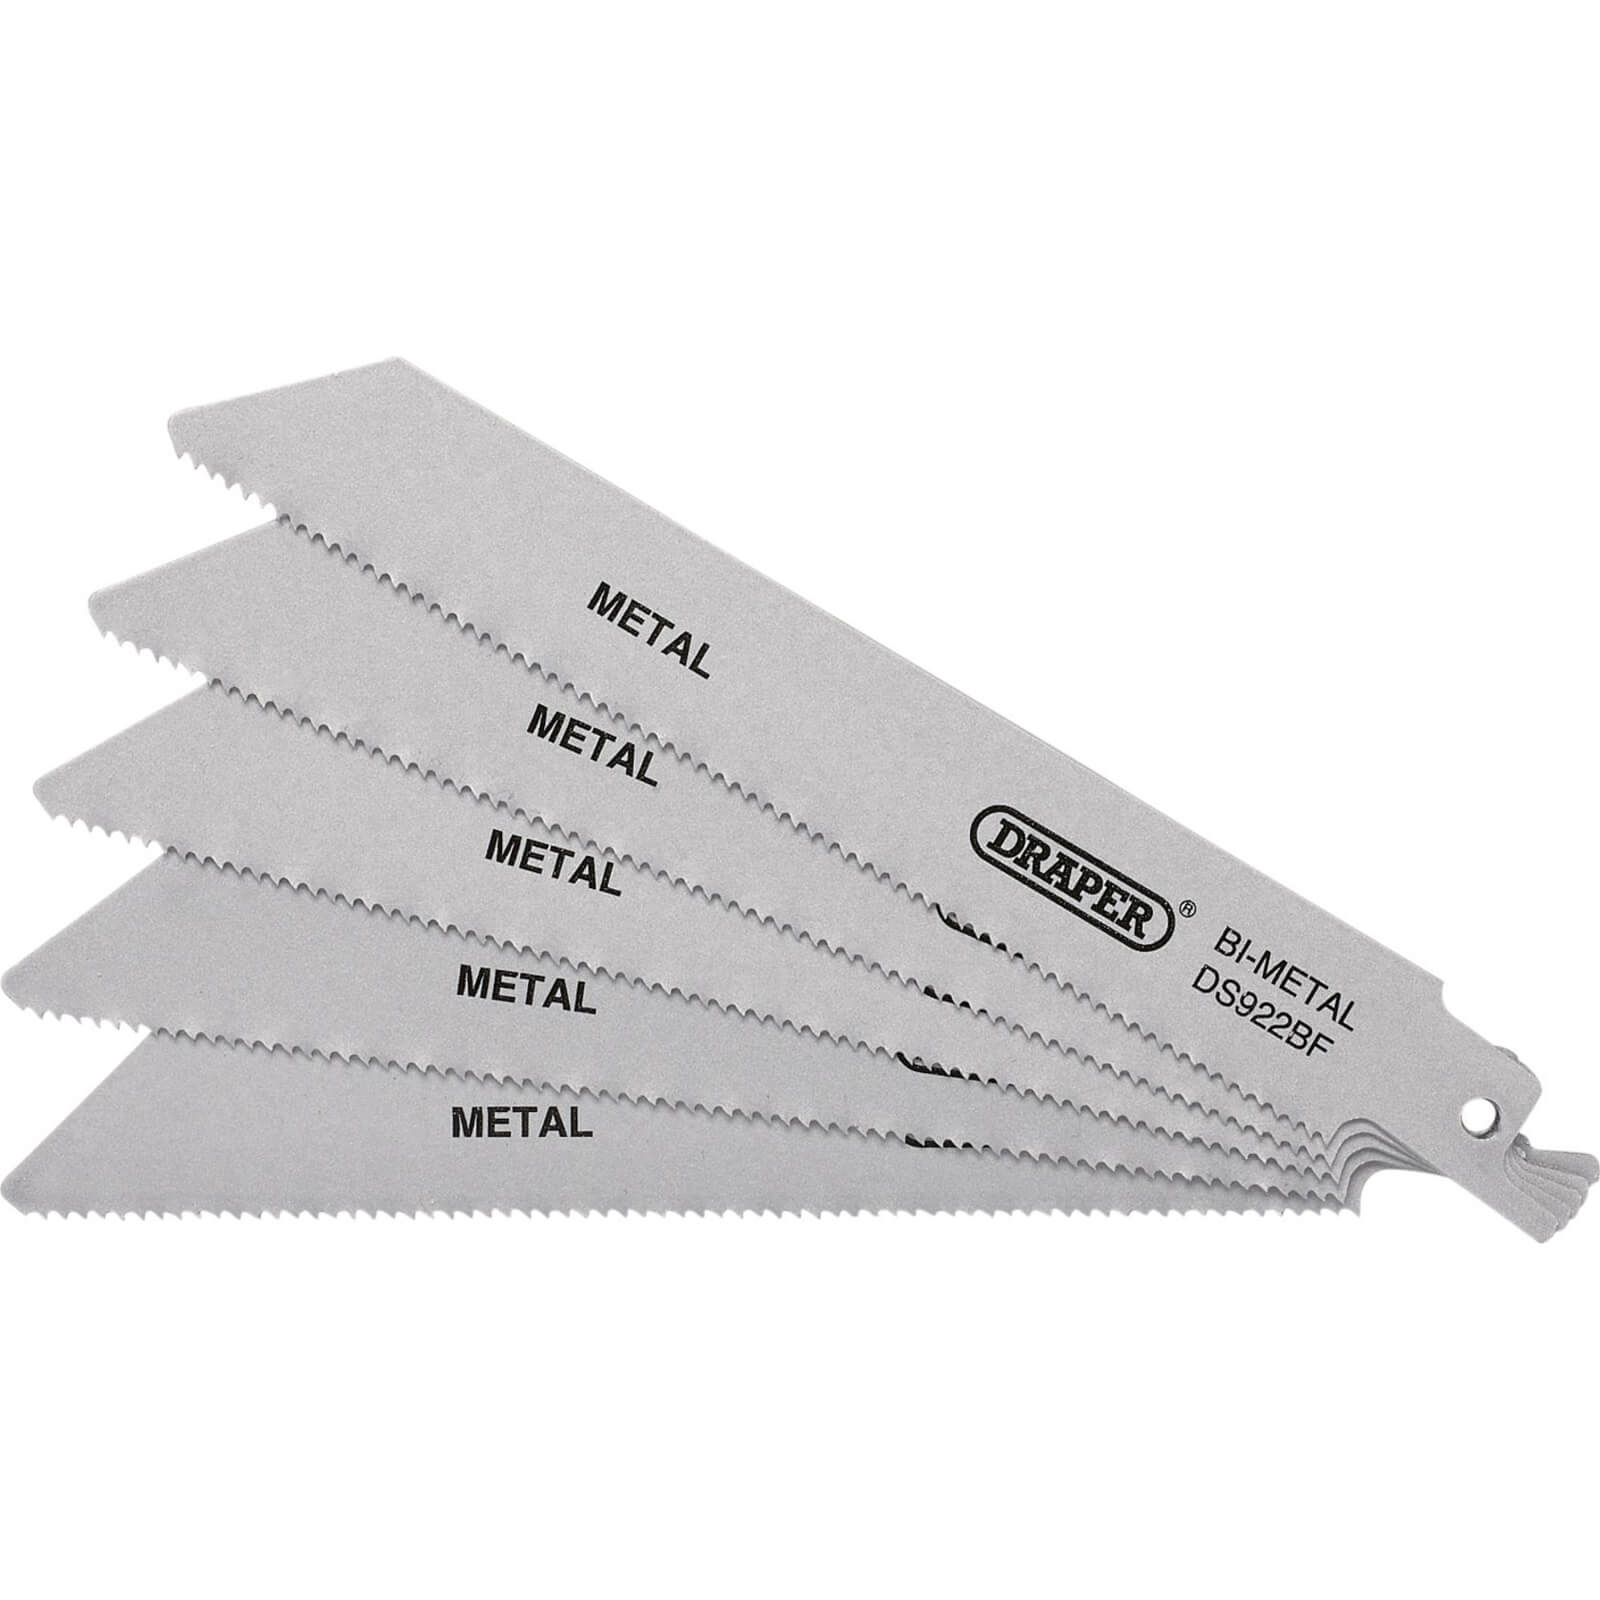 Image of Draper Bi-Metal Metal Cutting Reciprocating Sabre Saw Blades 150mm Pack of 5